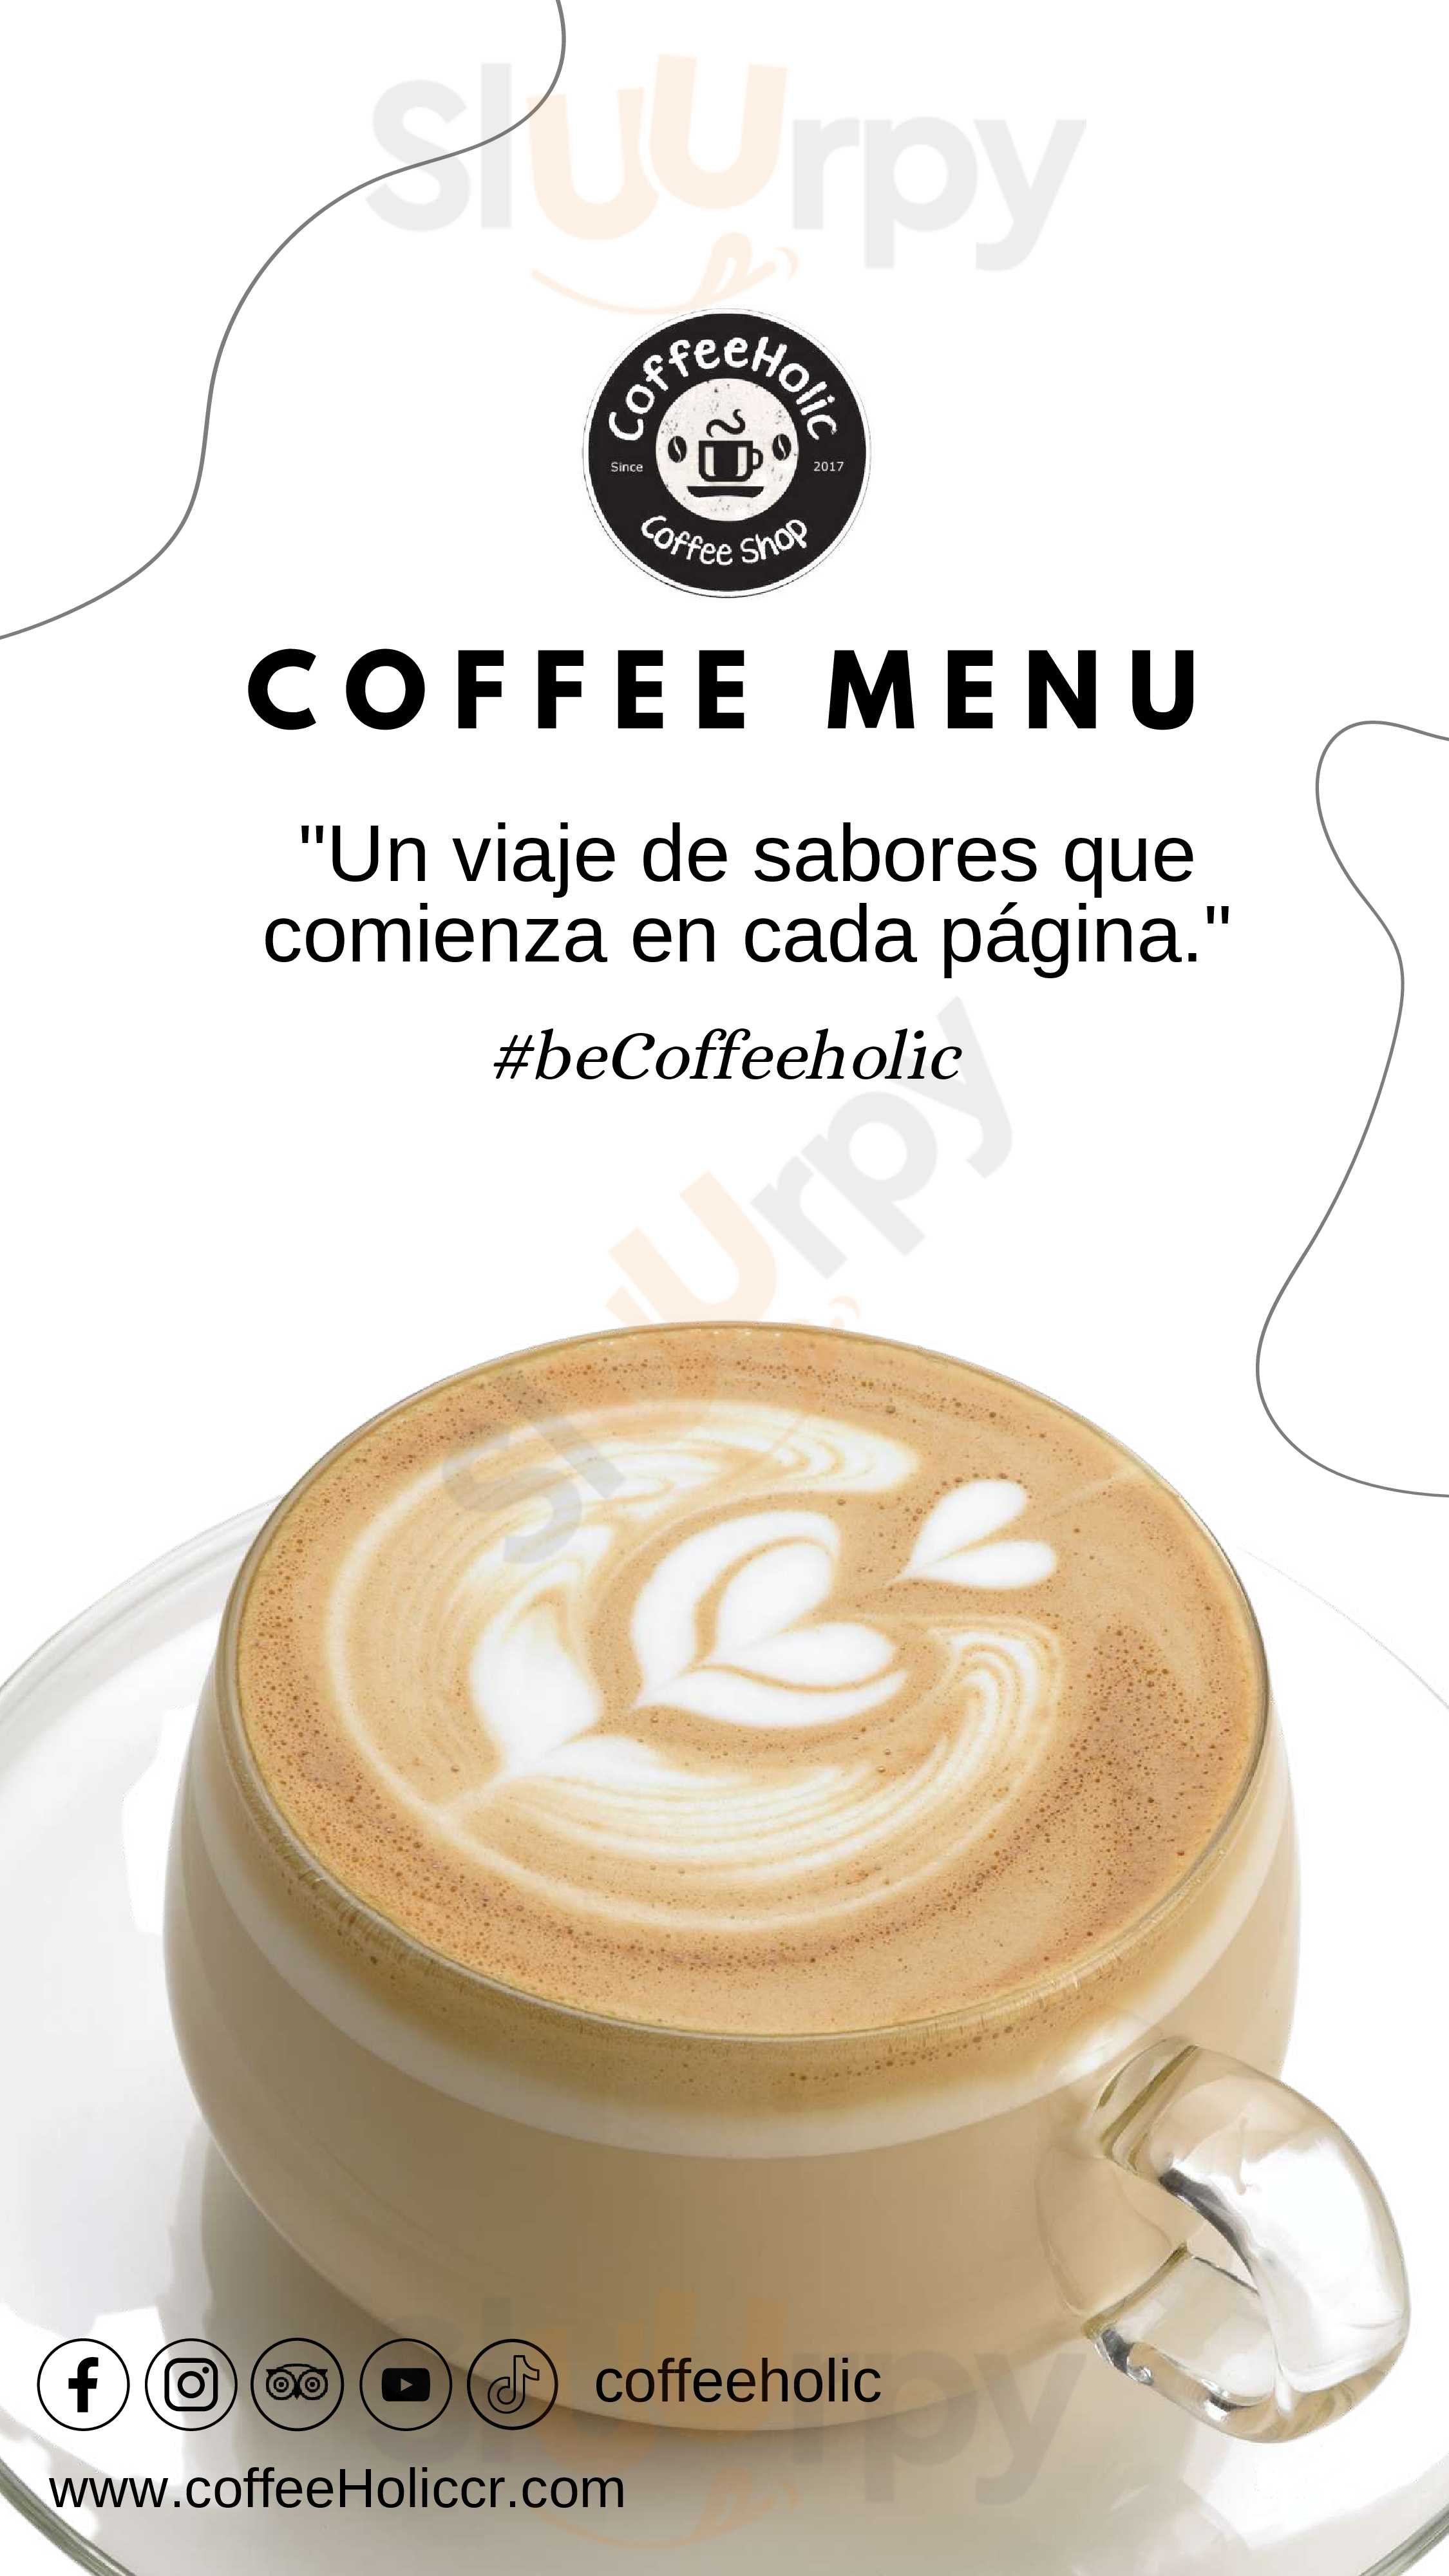 Coffeeholic Heredia Menu - 1